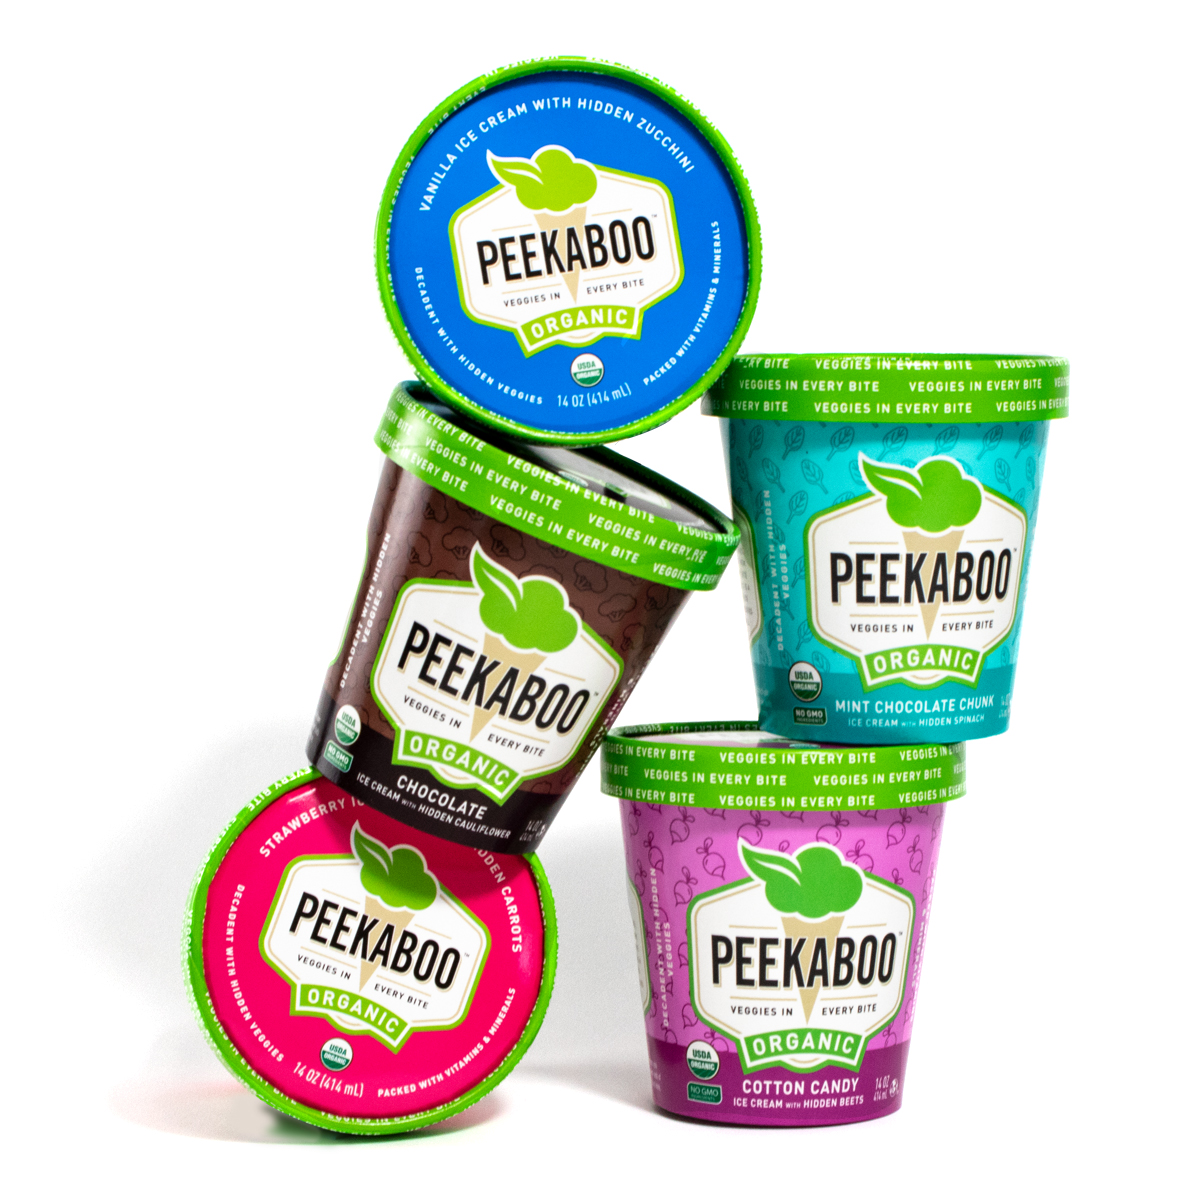 Peekaboo Ice Cream with Hidden Veggies; Healthier Ice Cream Brands we like